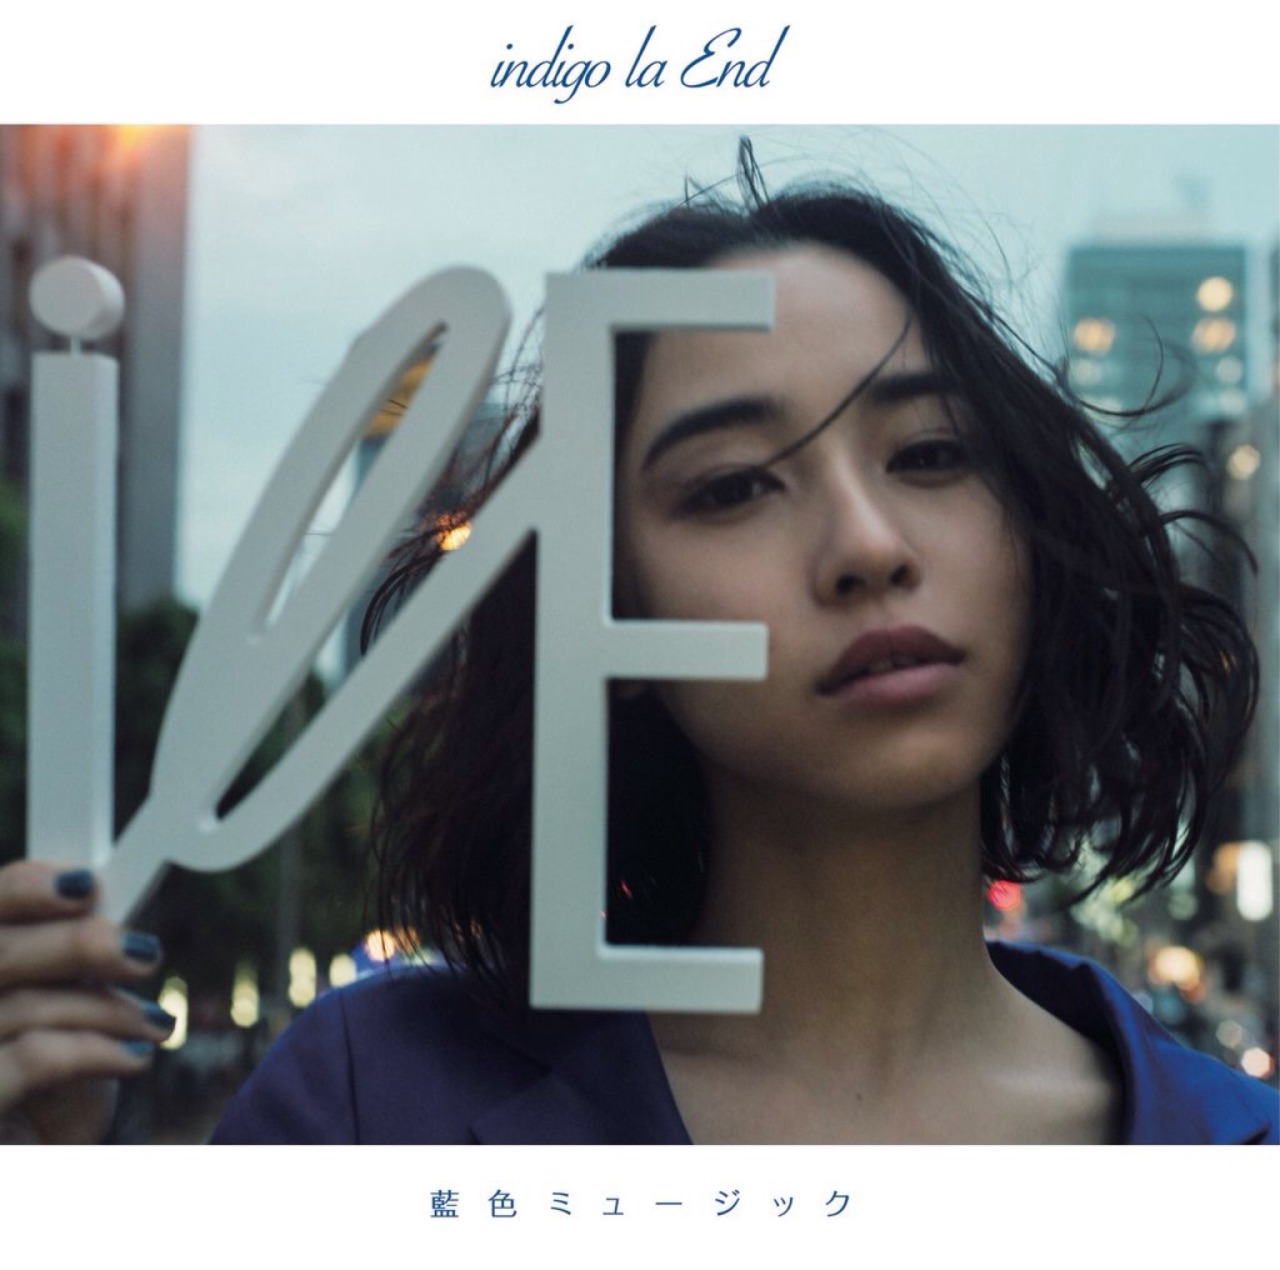 indigo la End reveal new promotional photo, album covers for “Aiiro